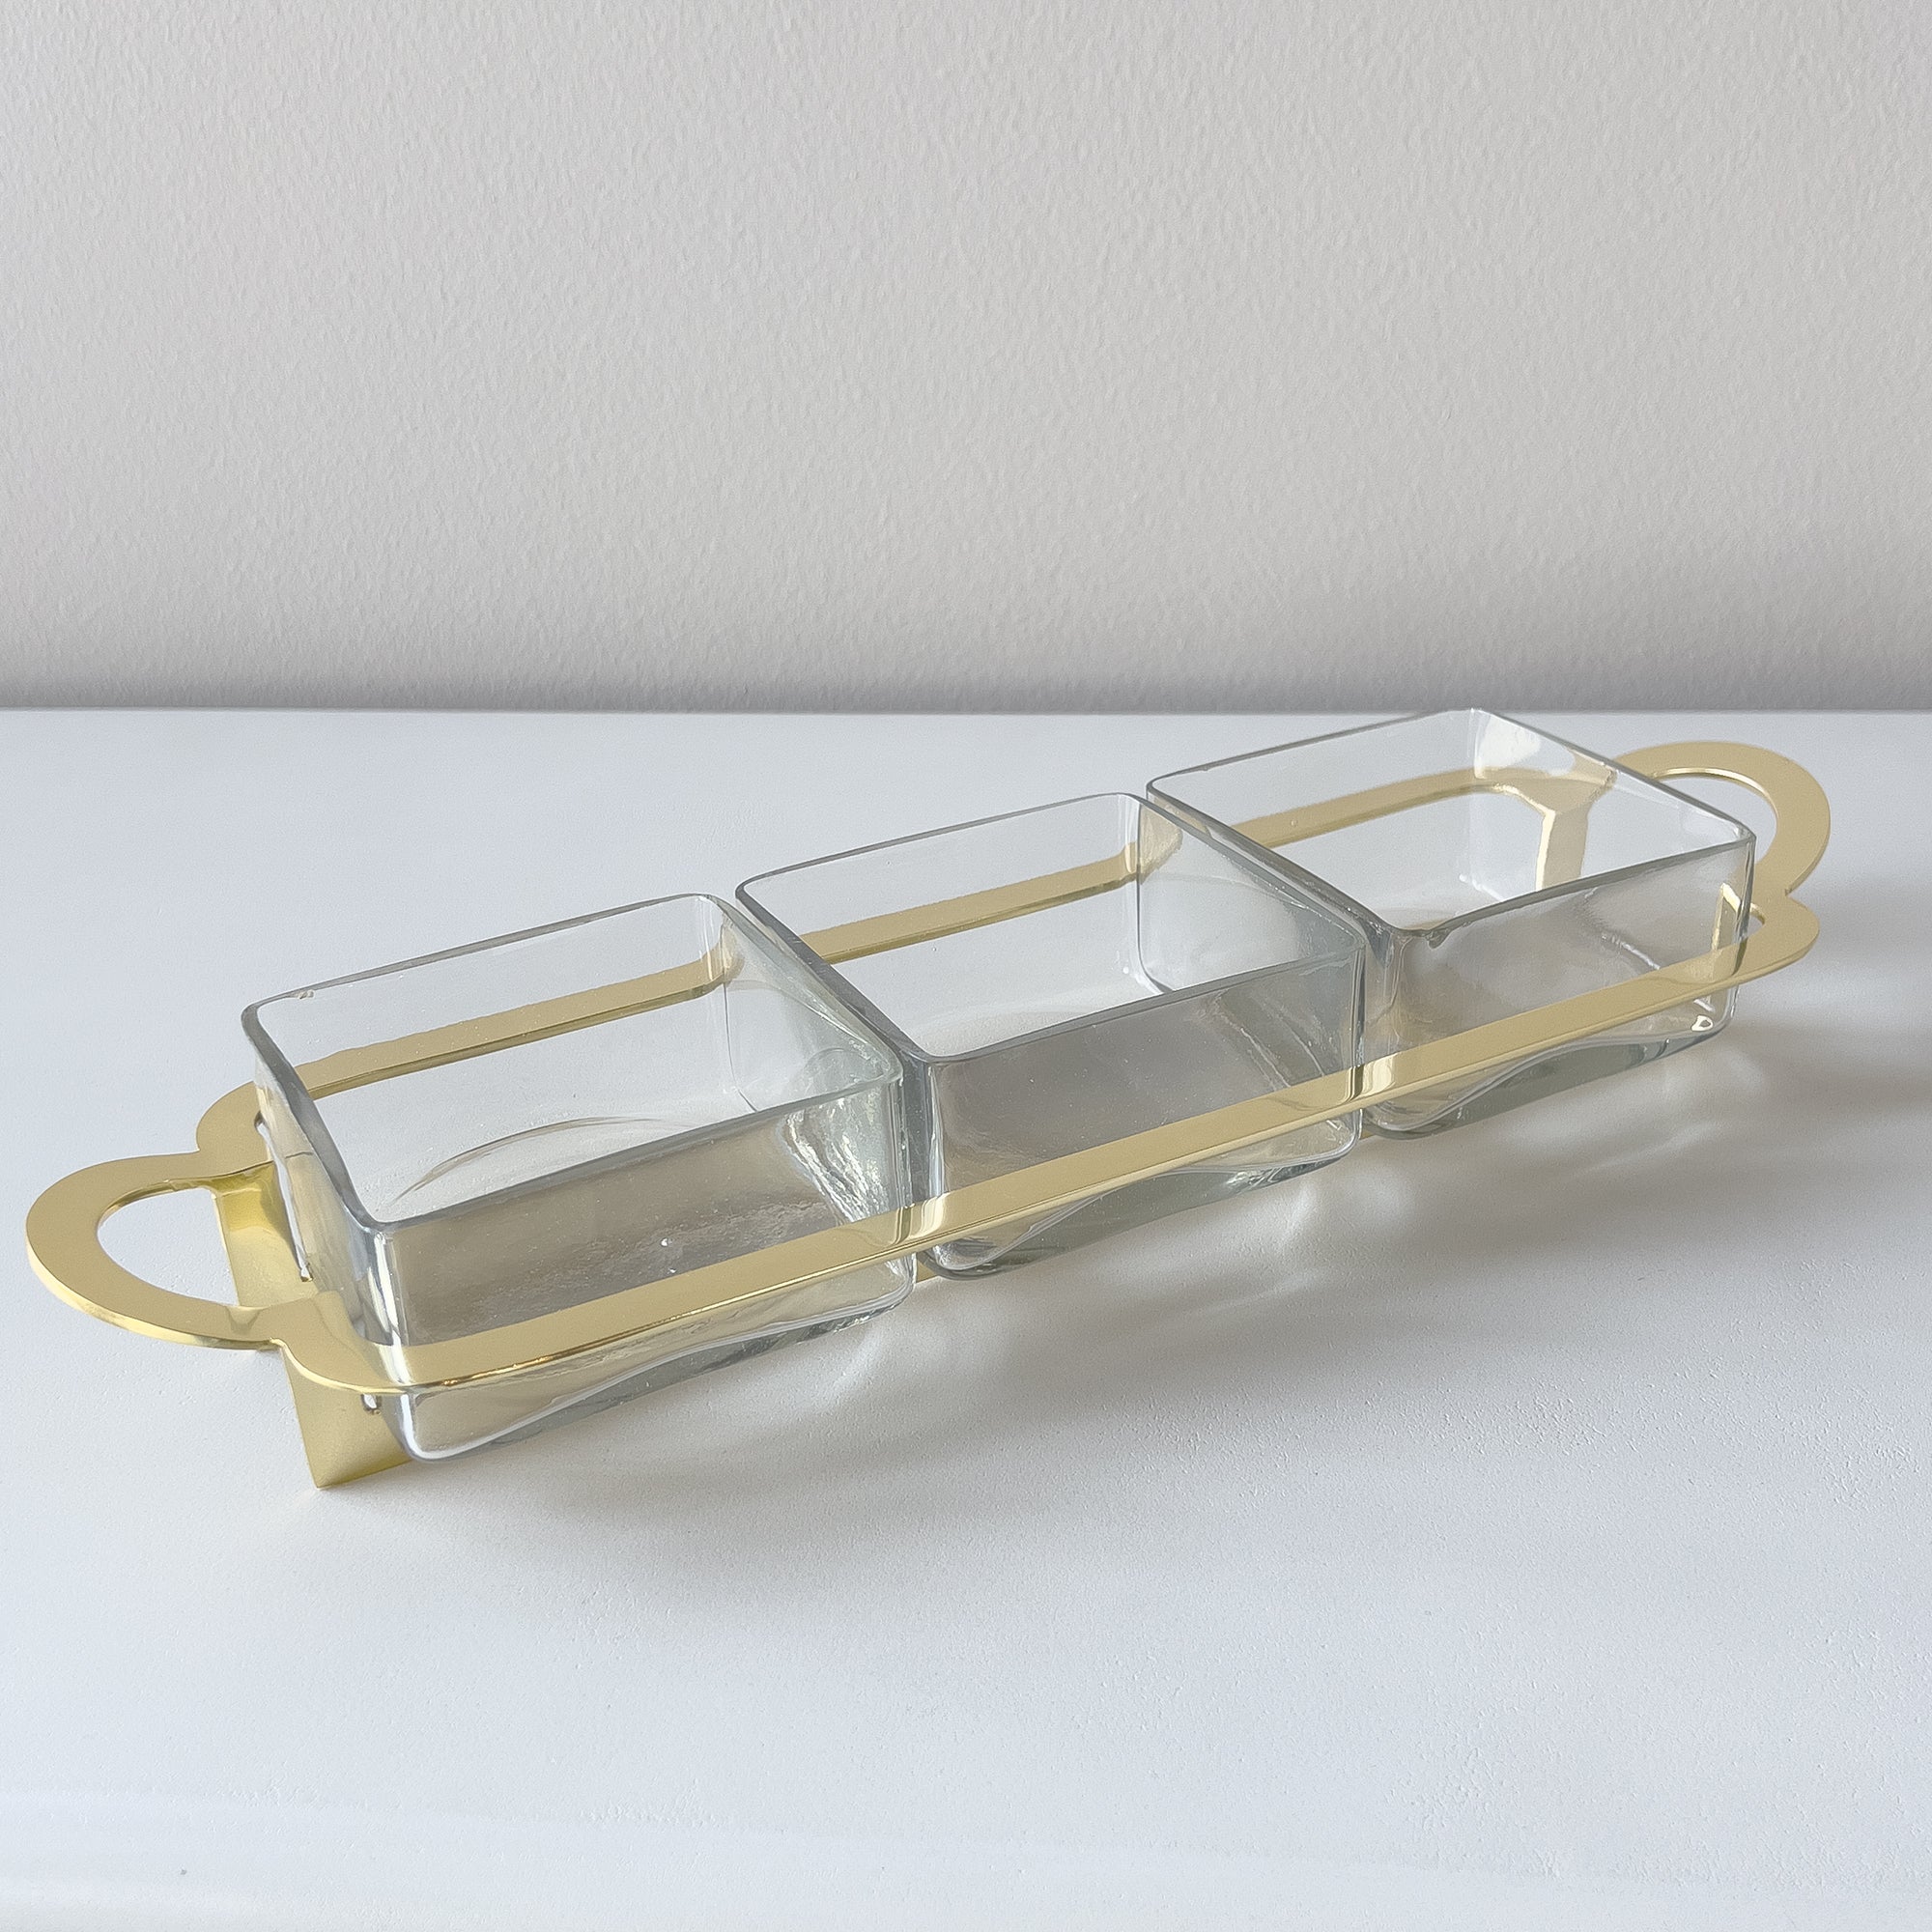 3 Section Glass Caddy With Metal Stand, Gold Color - علبة زجاجية مكونة من 3 أقسام مع حامل معدني، لون ذهبي